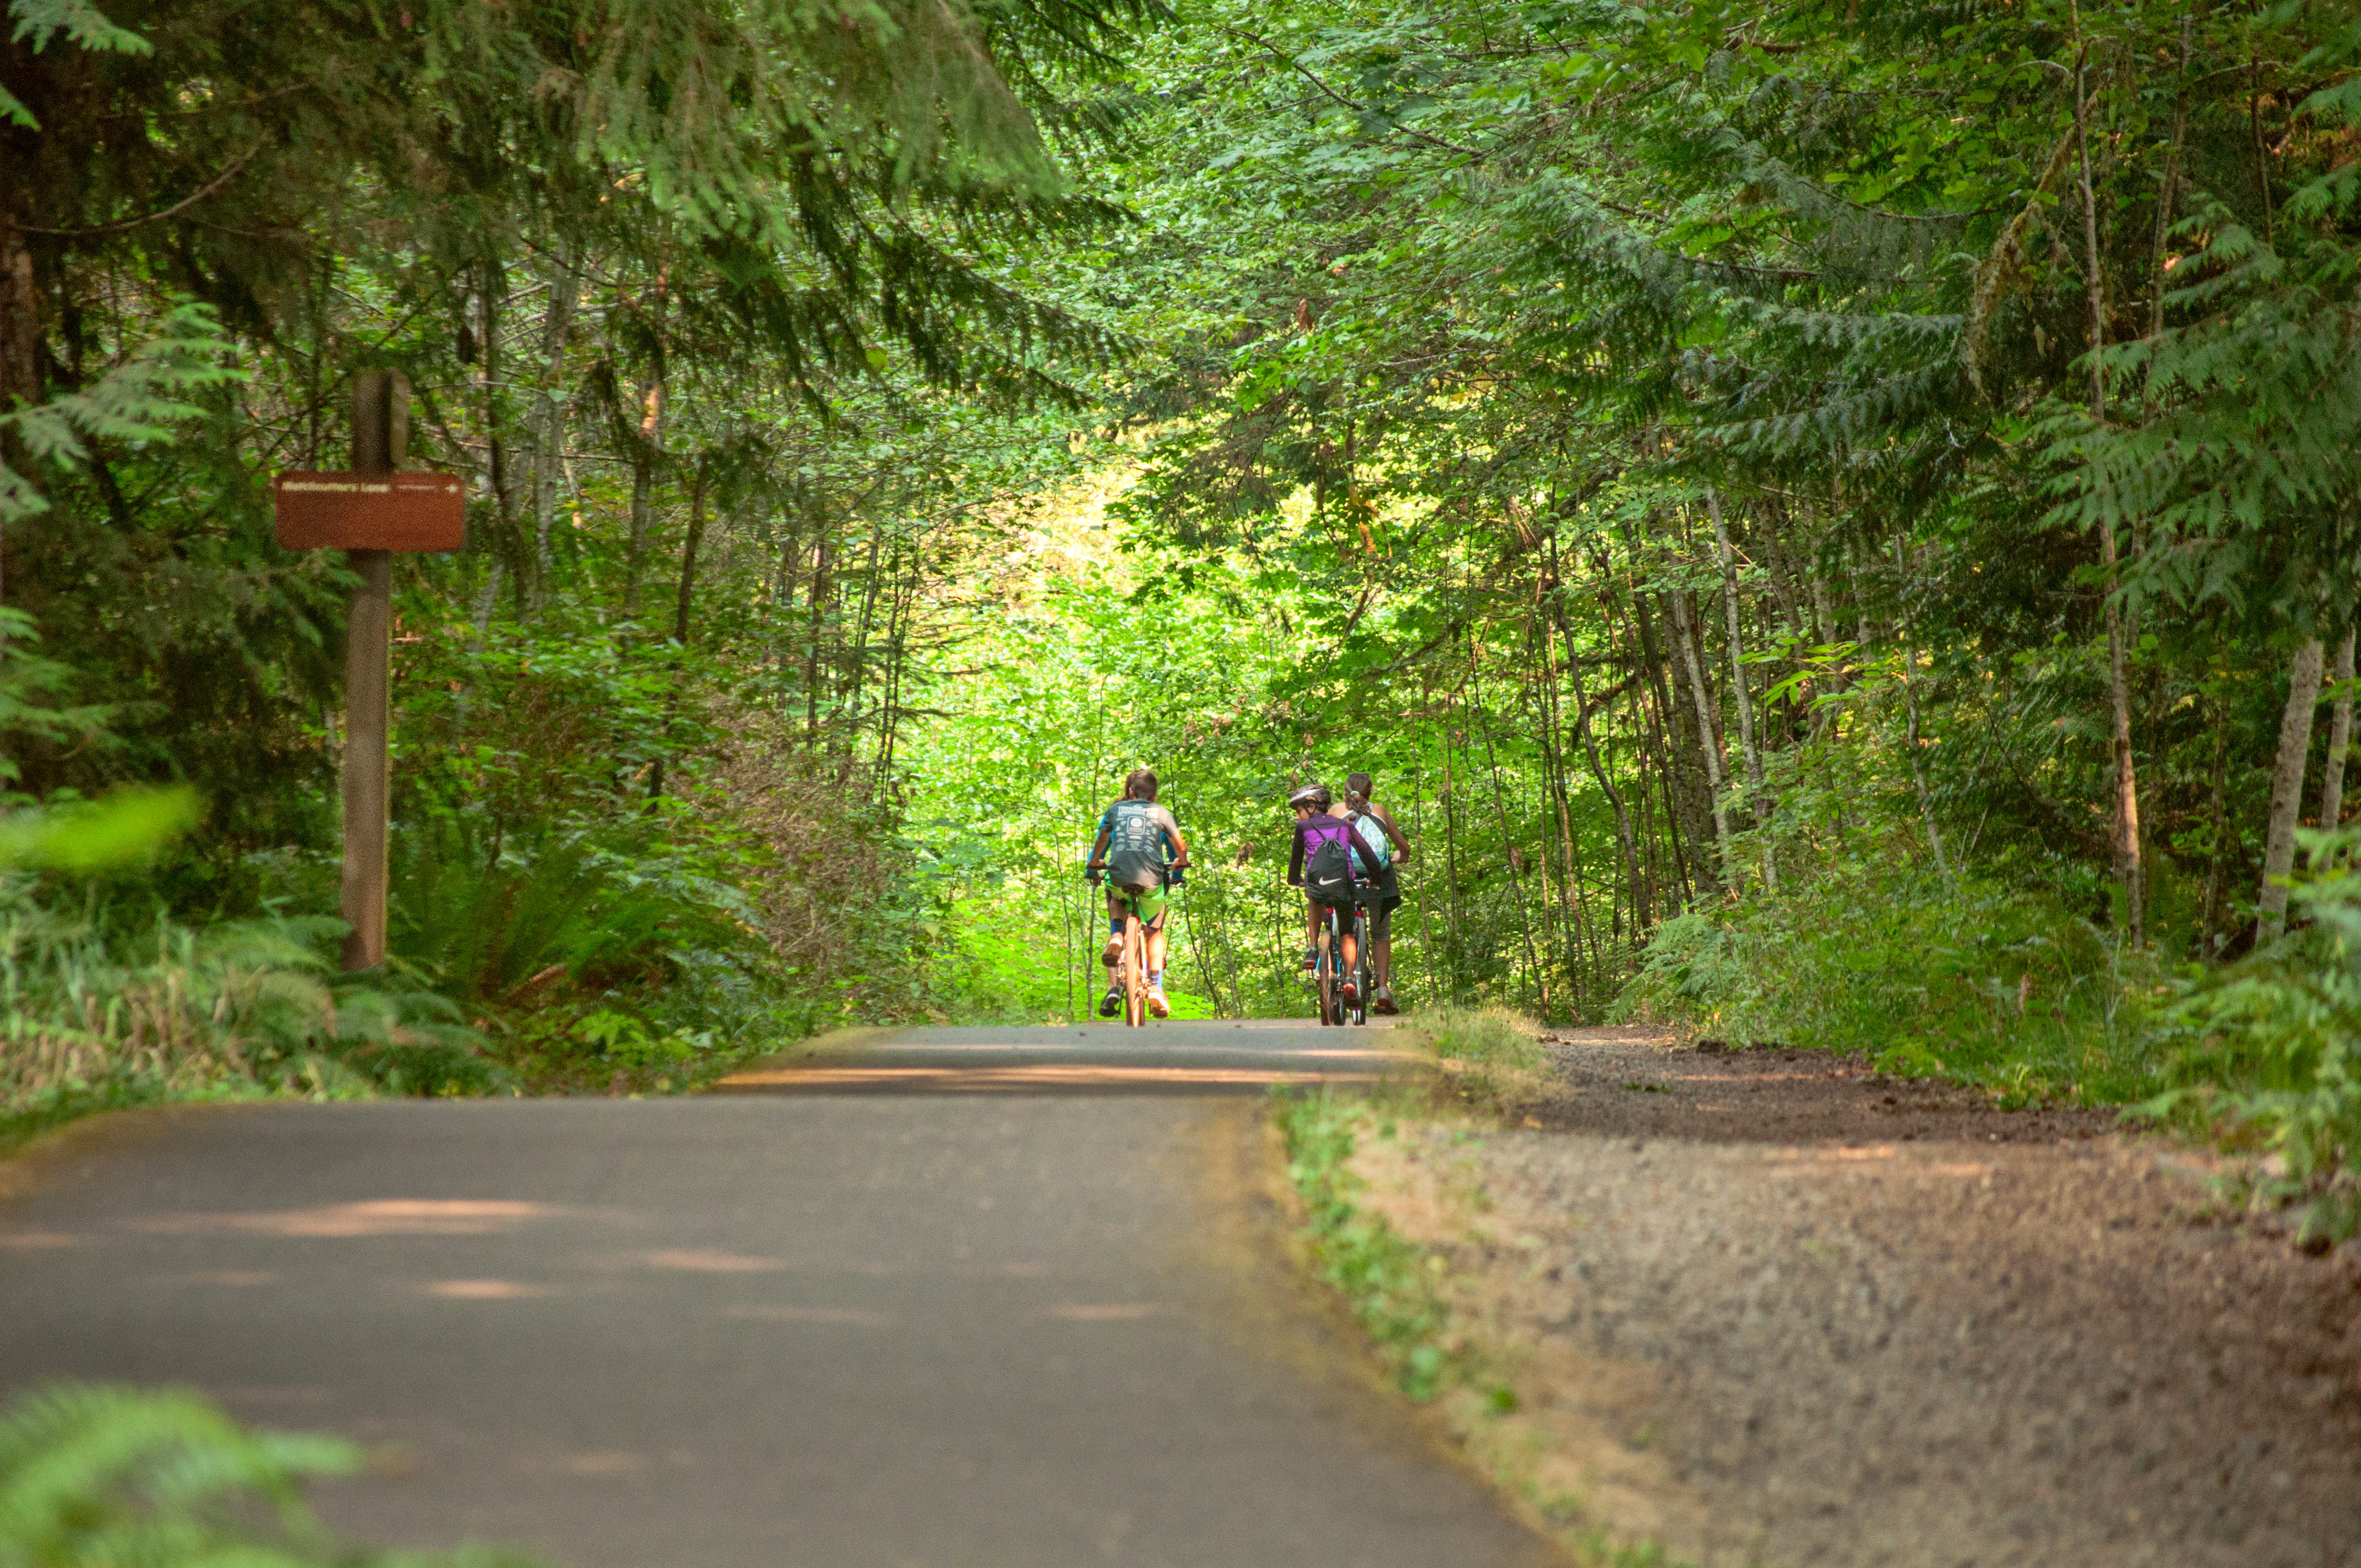 Three cyclists bike through a lush, green forested trail.